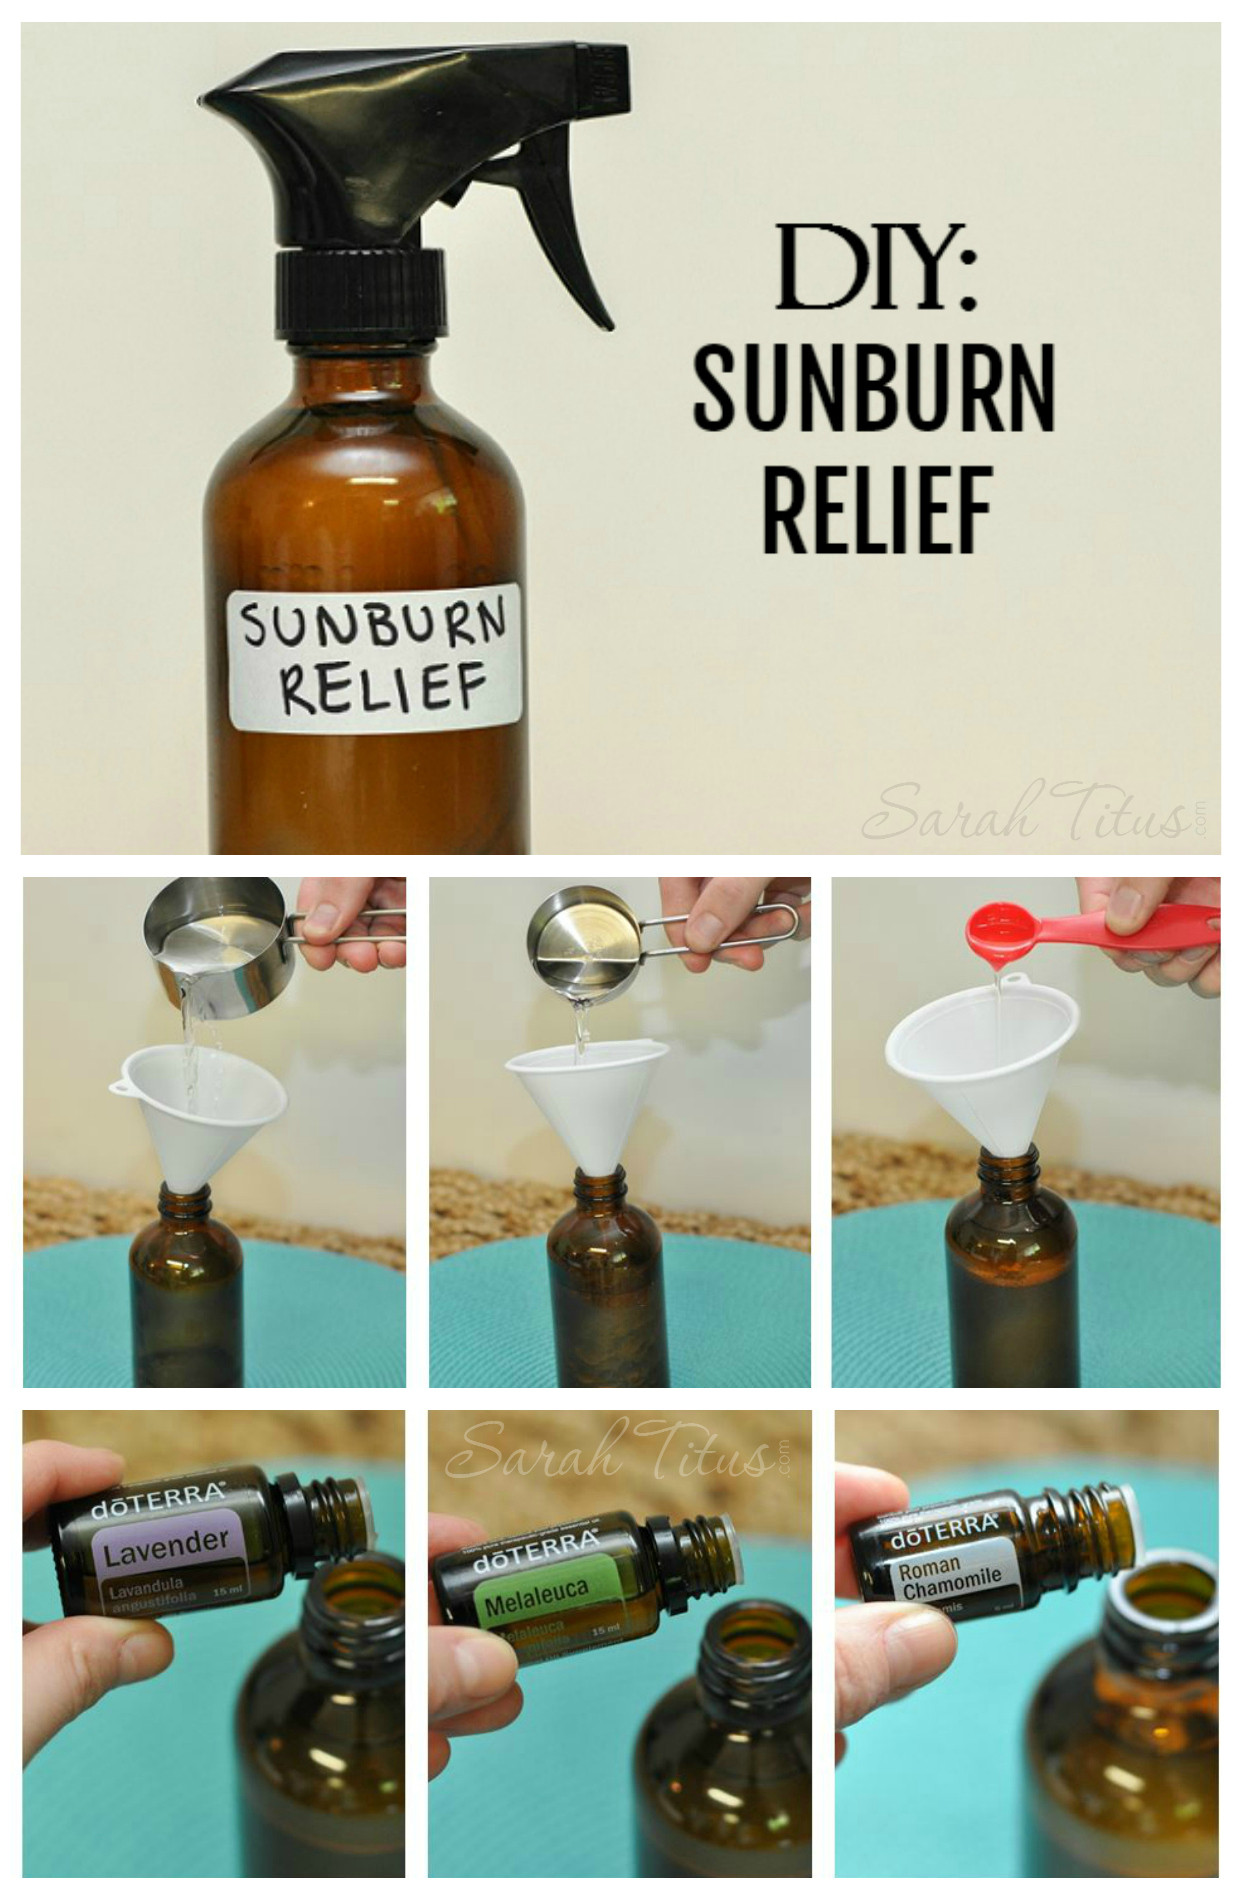 Best ideas about DIY Sunburn Relief
. Save or Pin DIY Sunburn Relief Sarah Titus Now.